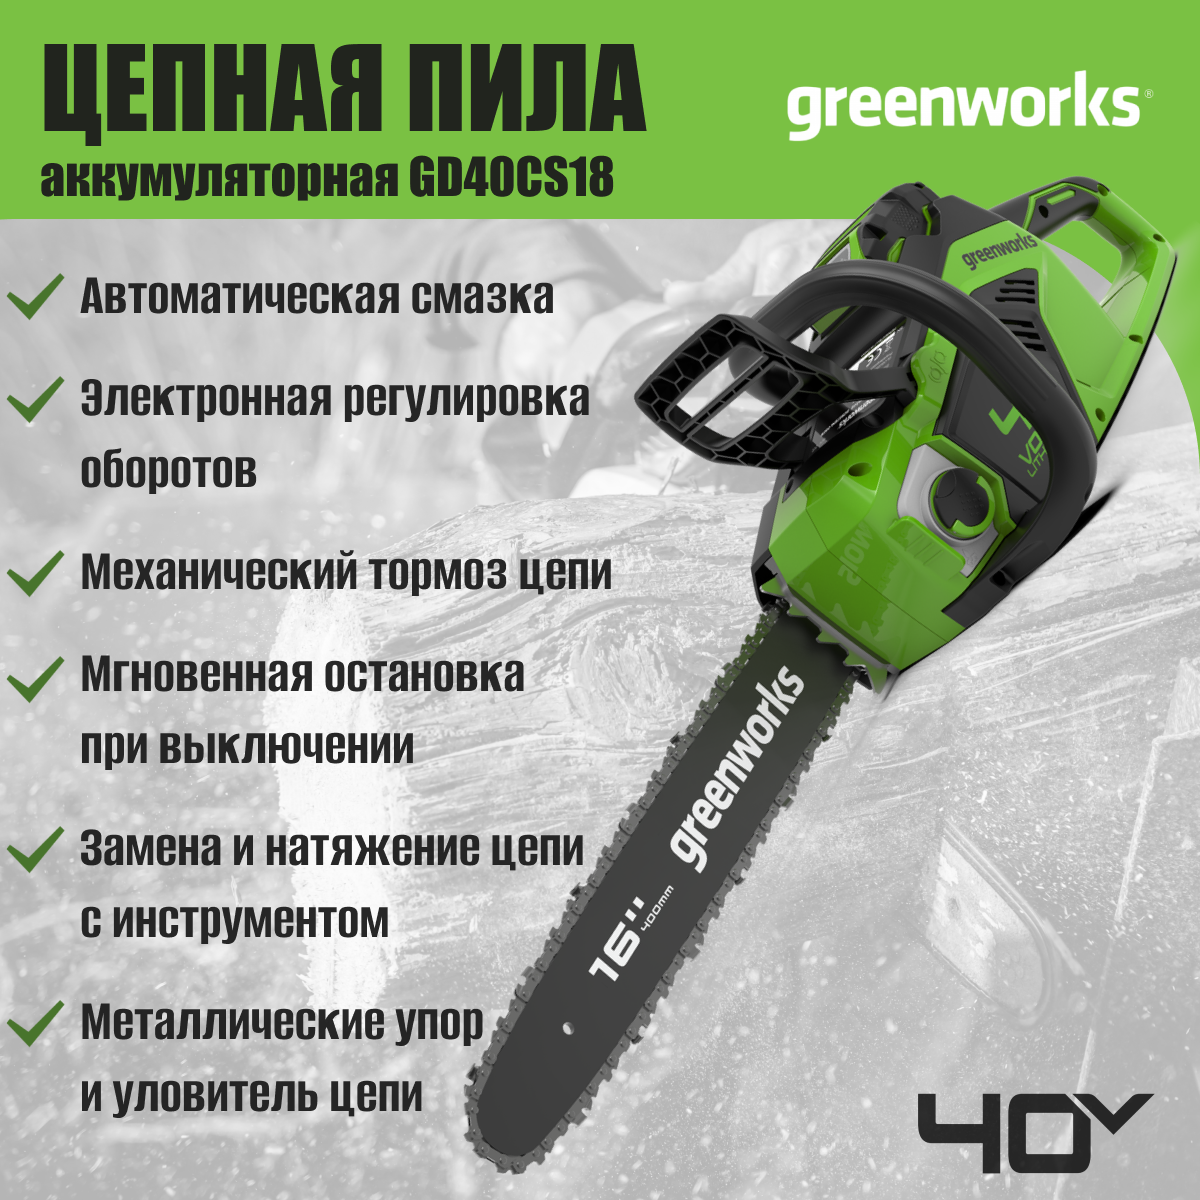 Цепная пила аккумуляторная Greenworks Арт. 2005807, 40V, 40 см, бесщеточная, до 1,8 КВт, без АКБ и ЗУ